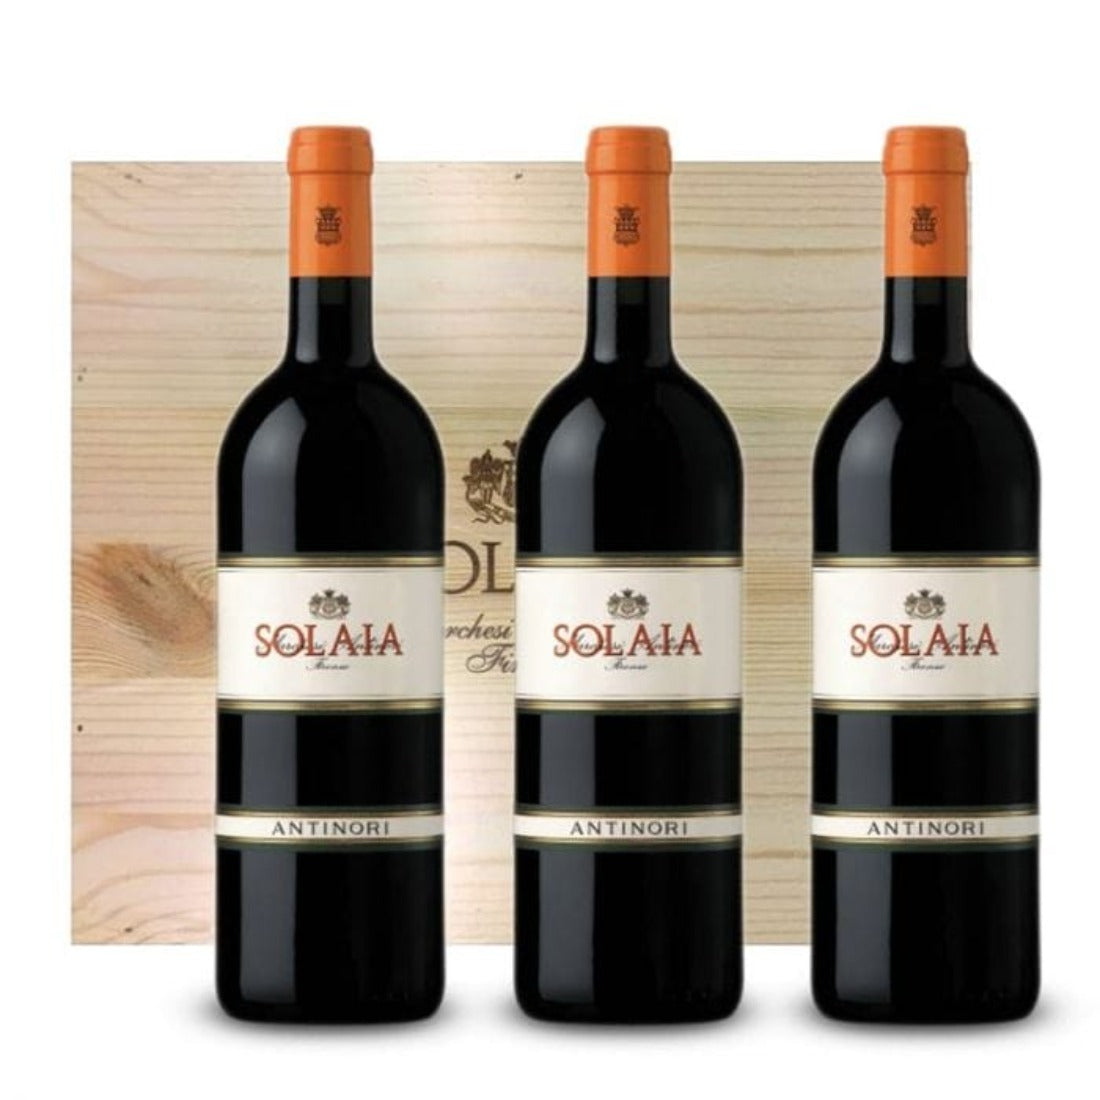 Antinori Solaia 2020 Igt Toscana 3 bottiglie - Antinori